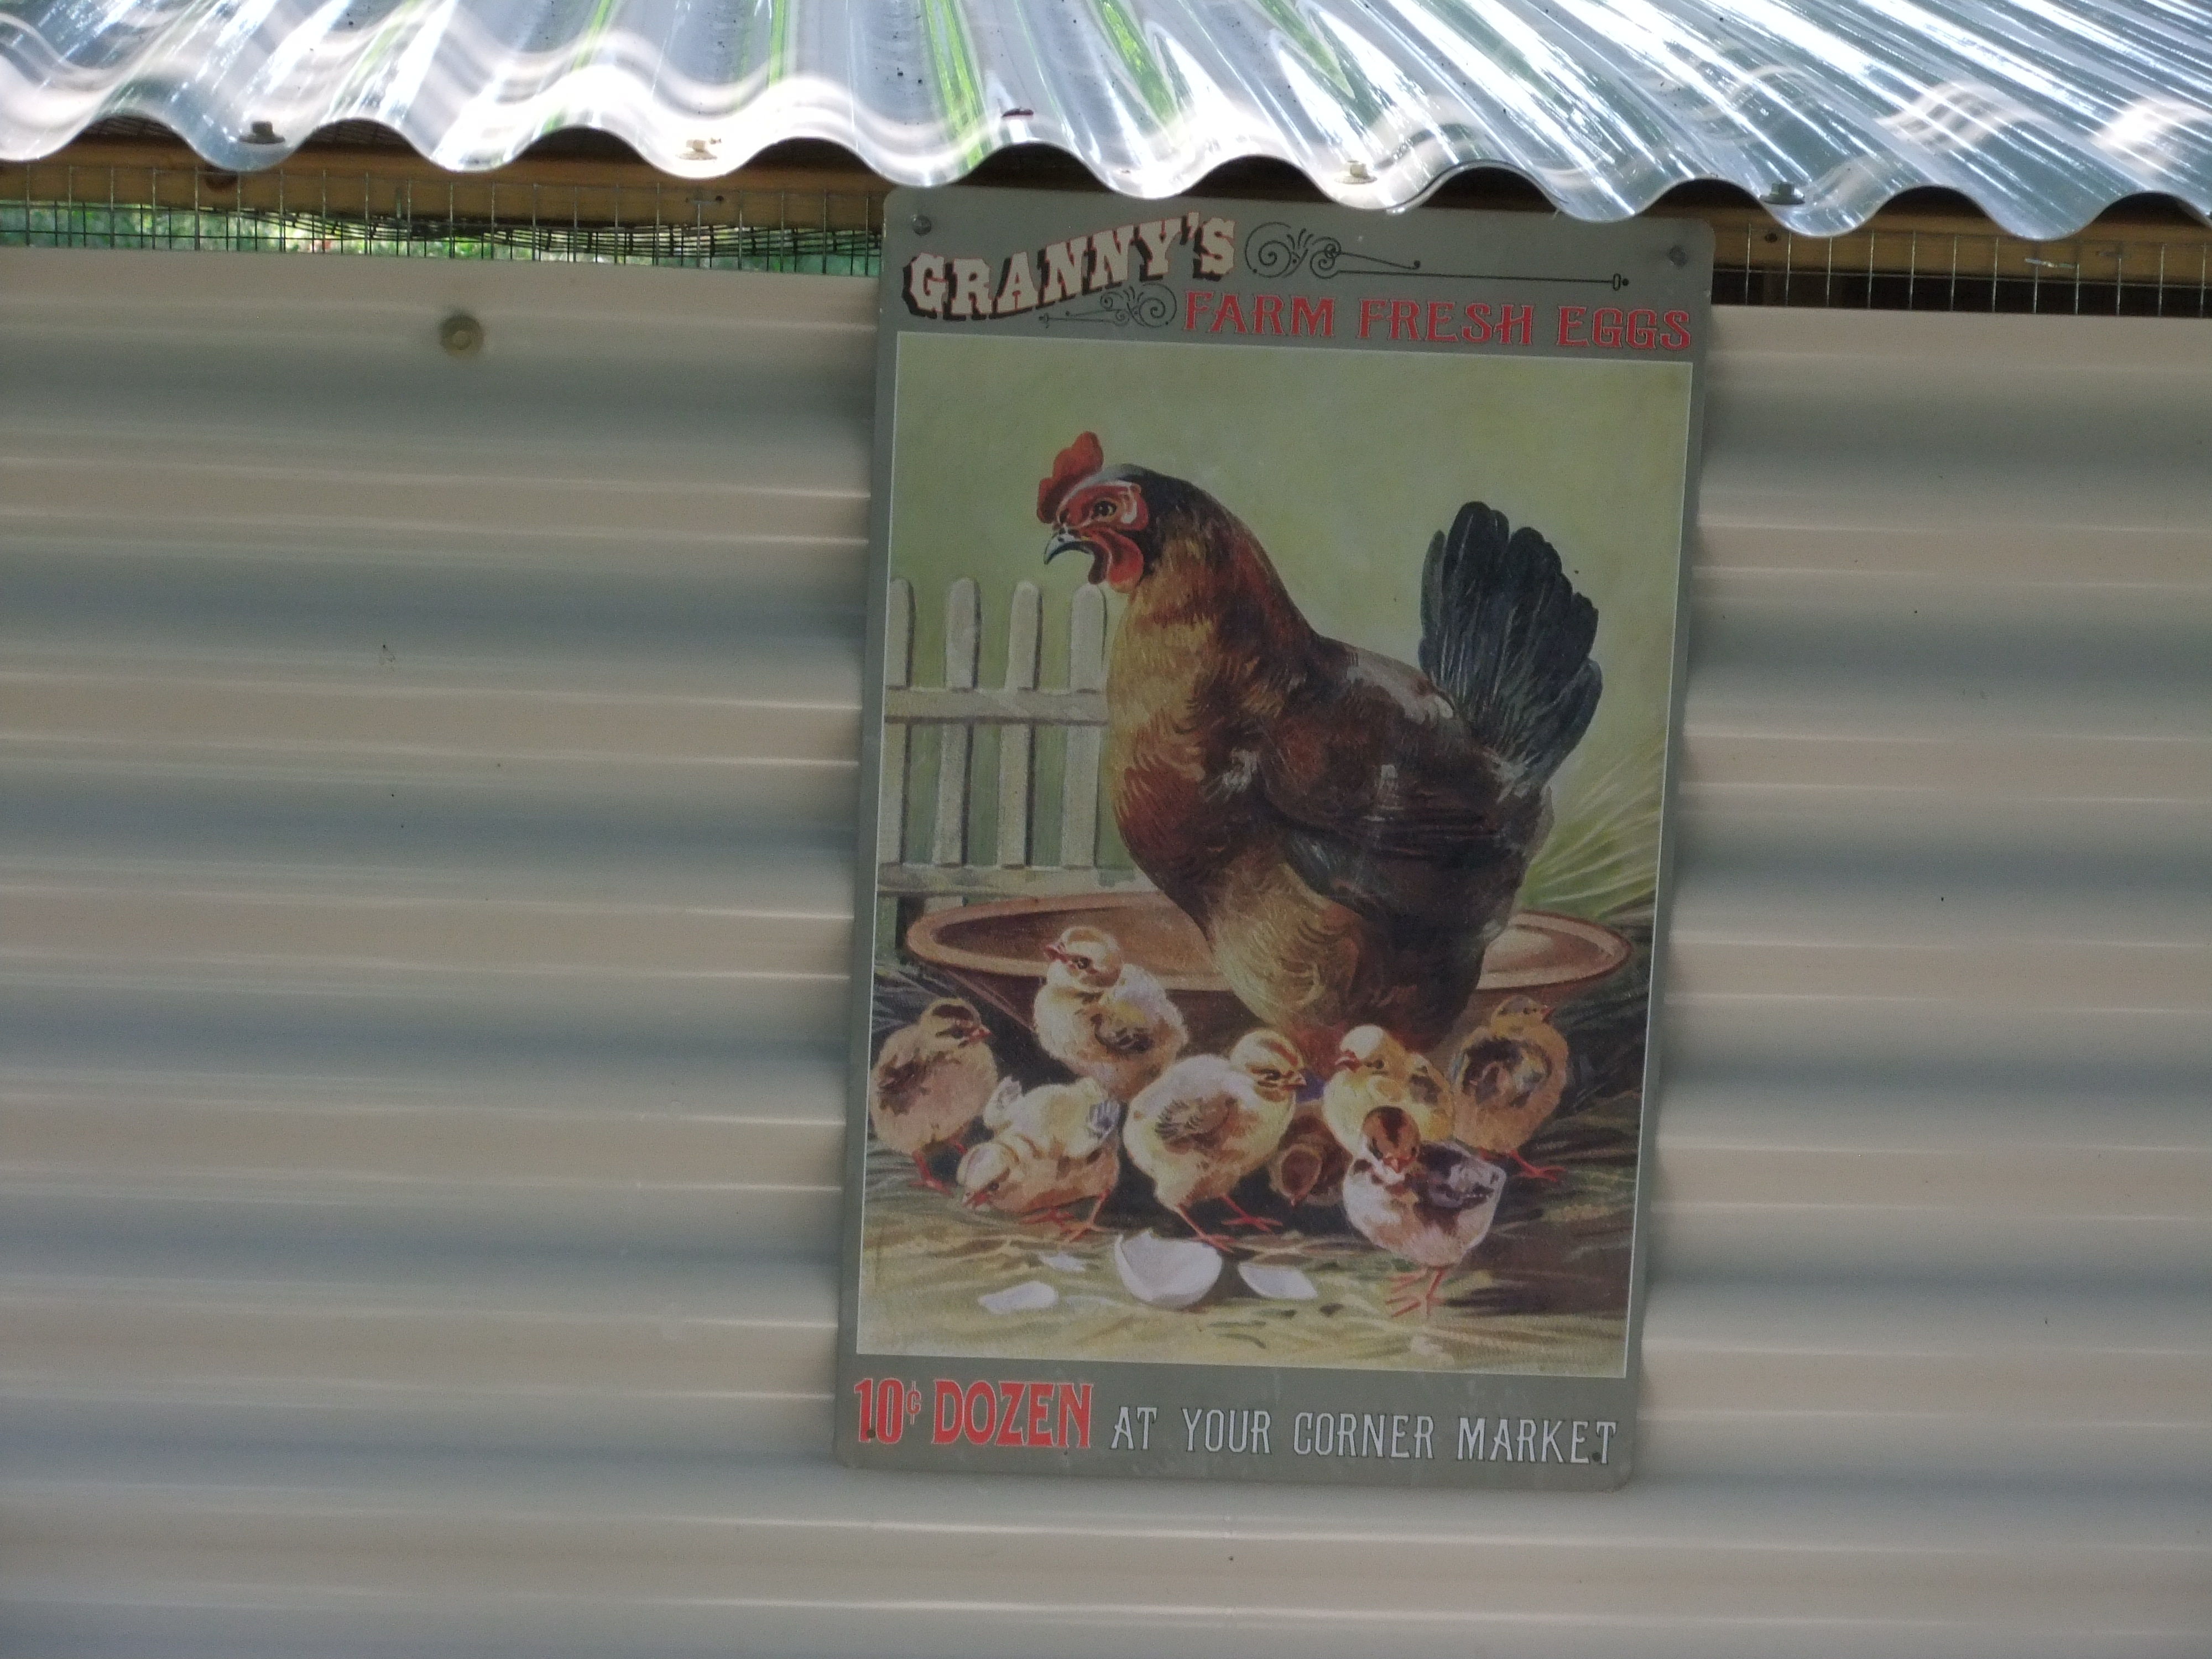 Chicken Coop Sign